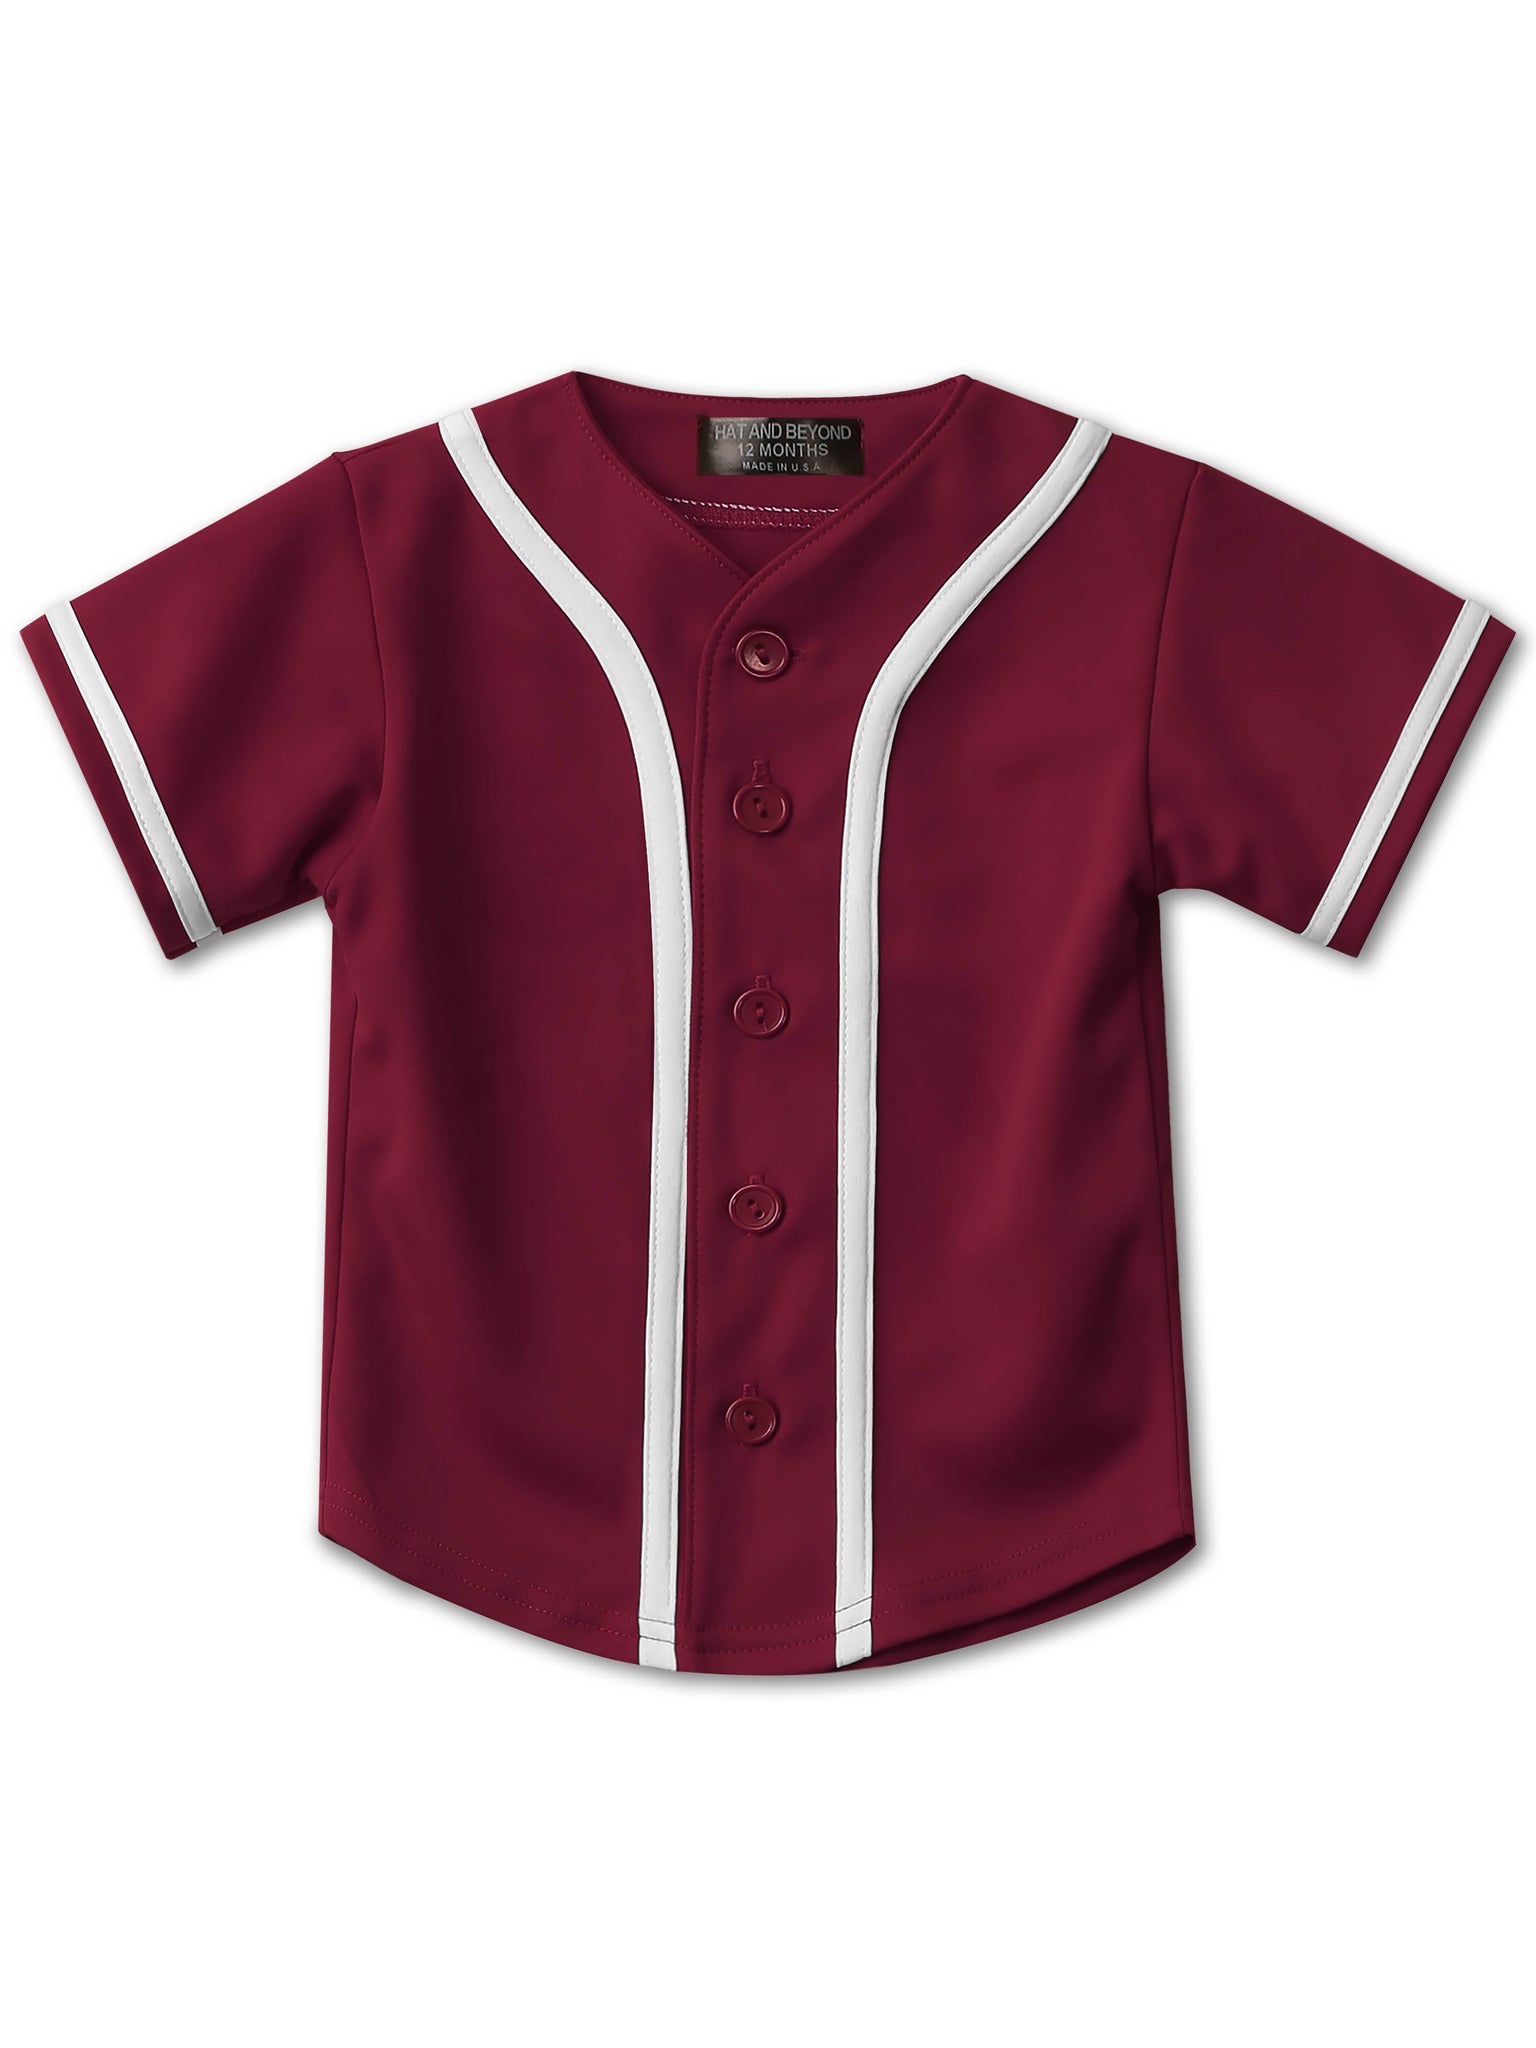 Kids' Button Down Baseball Jersey - Shirts & Top